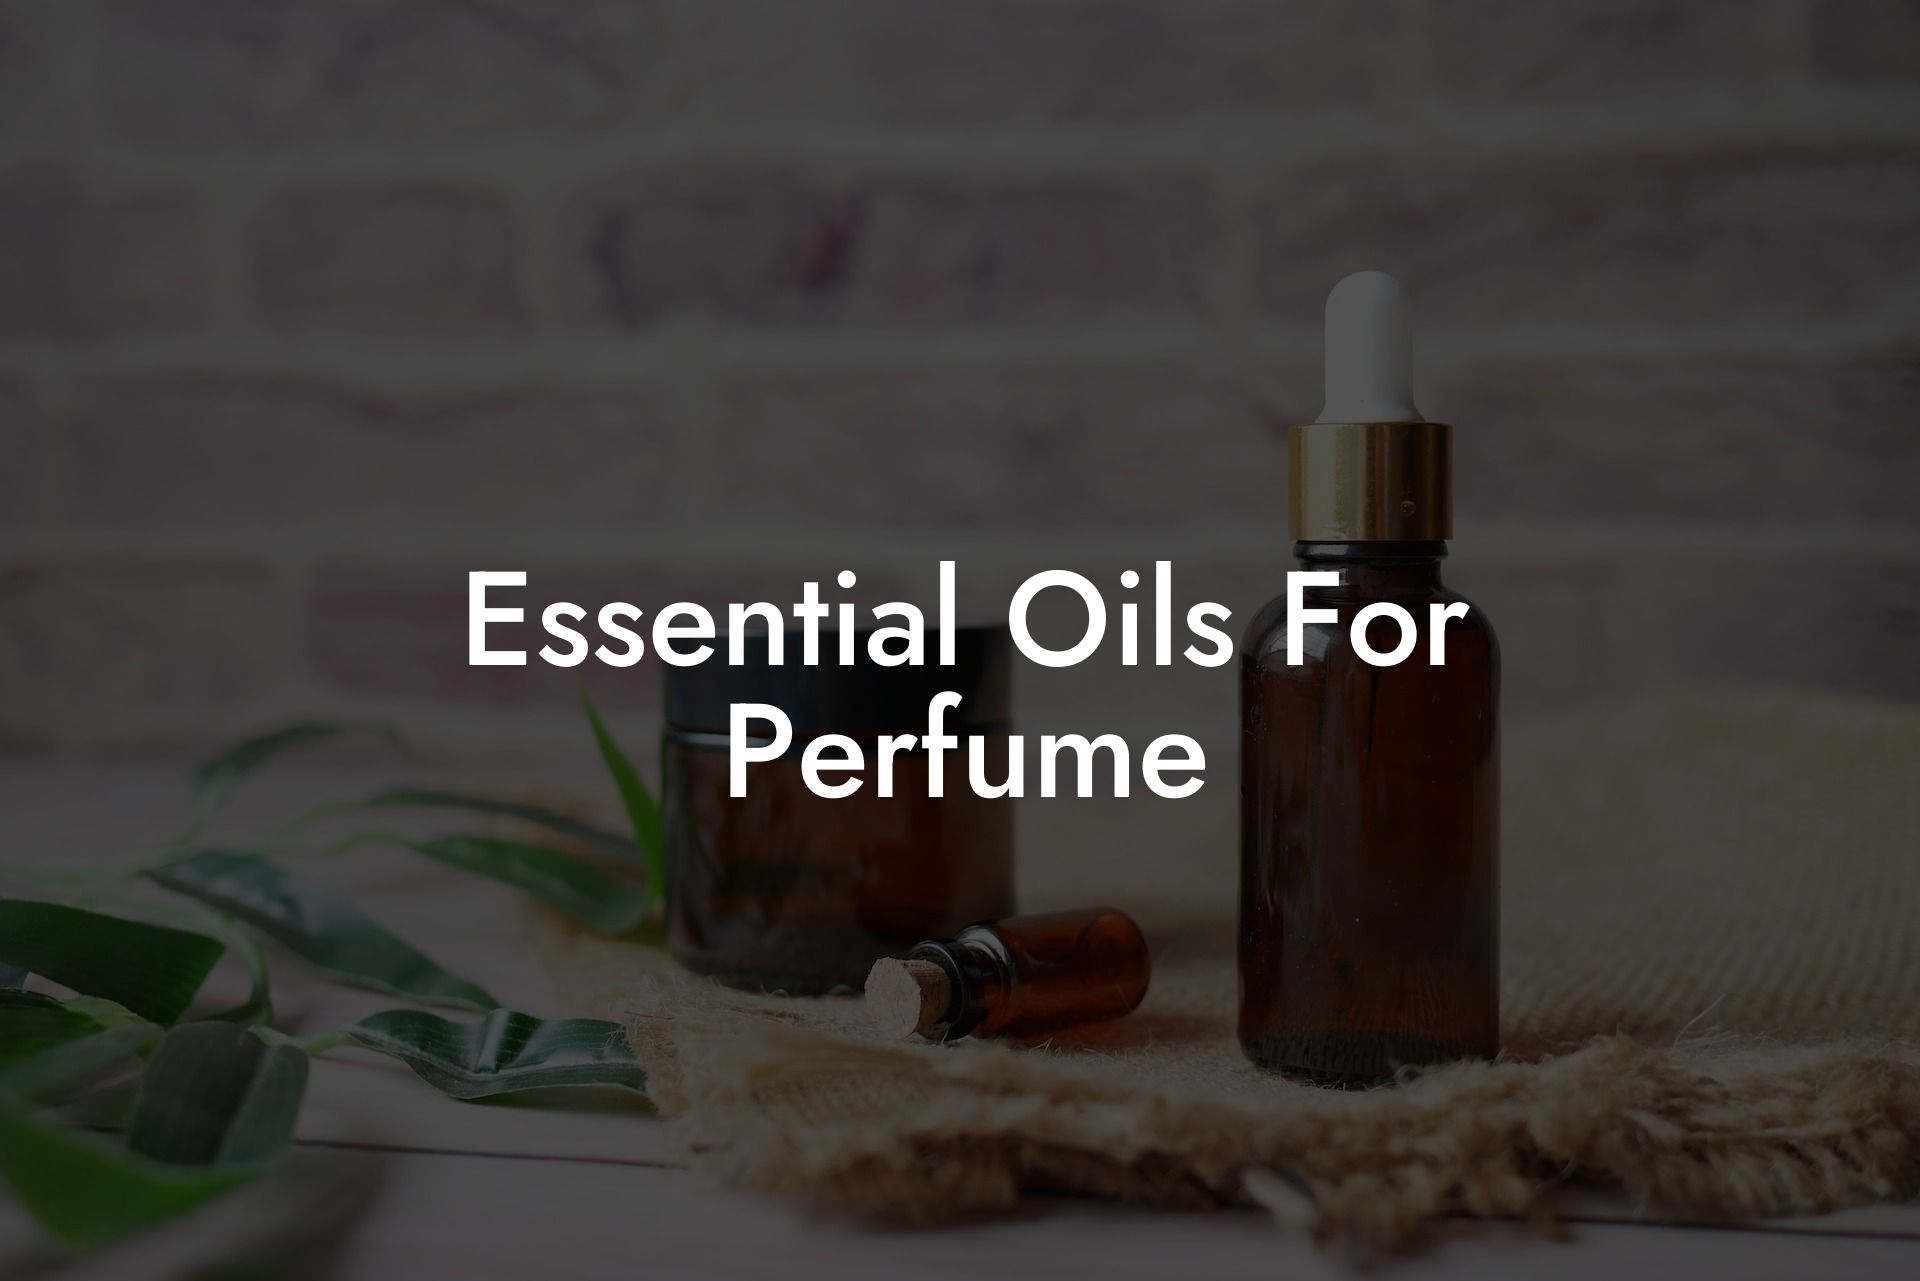 Essential Oils For Perfume